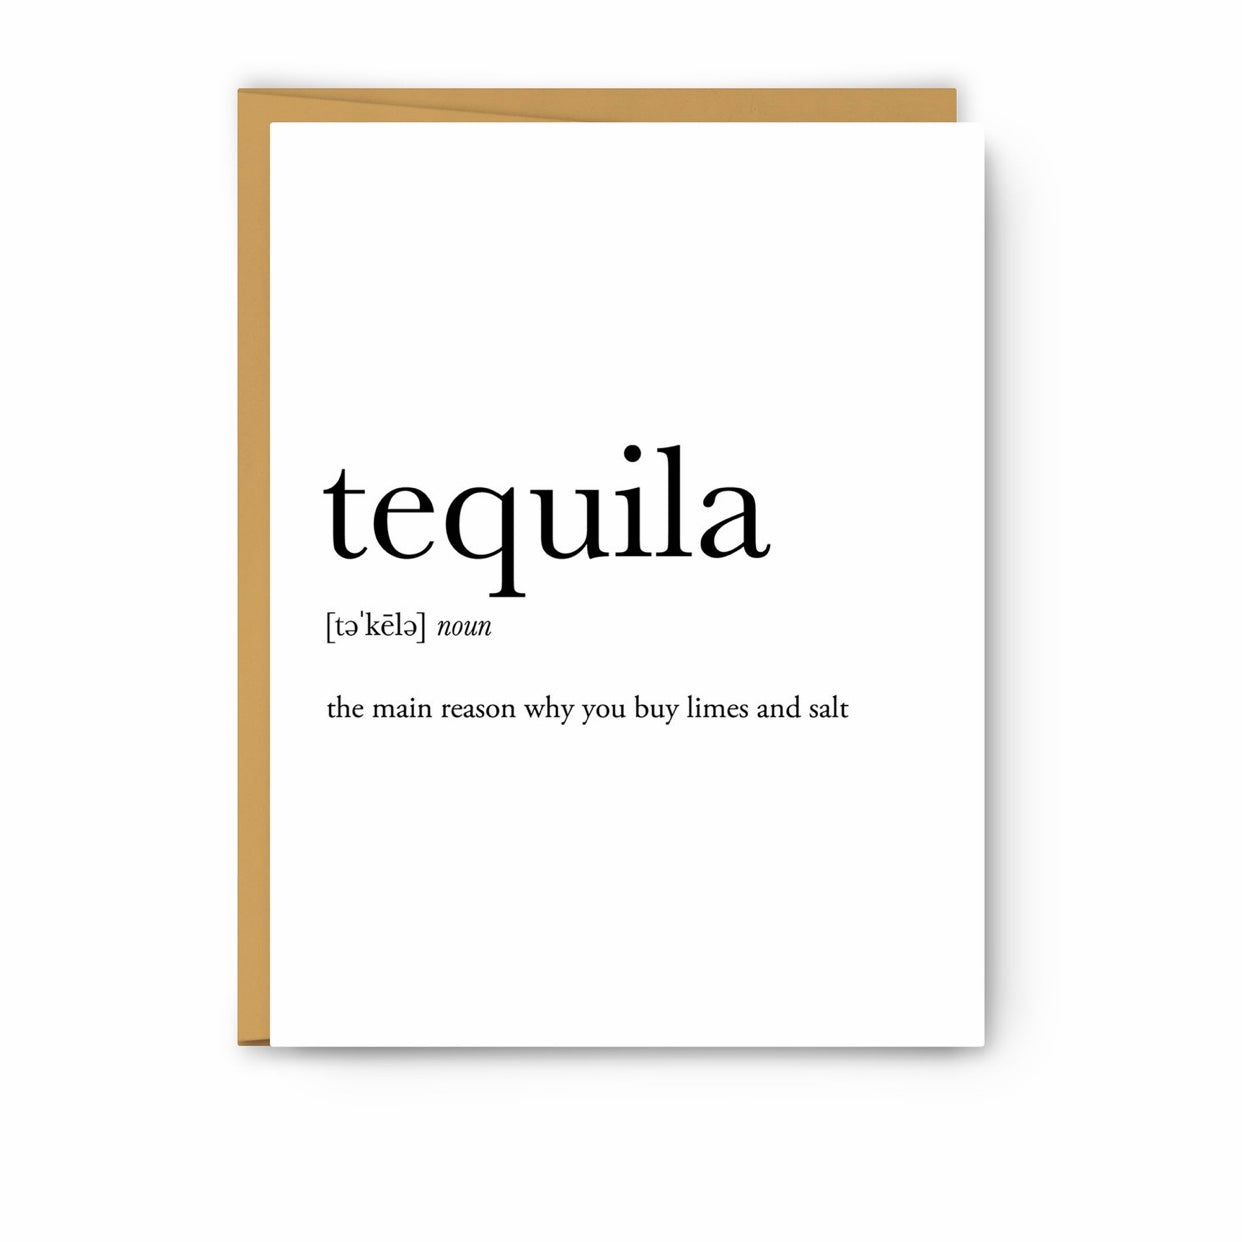 tequila noun greeting card